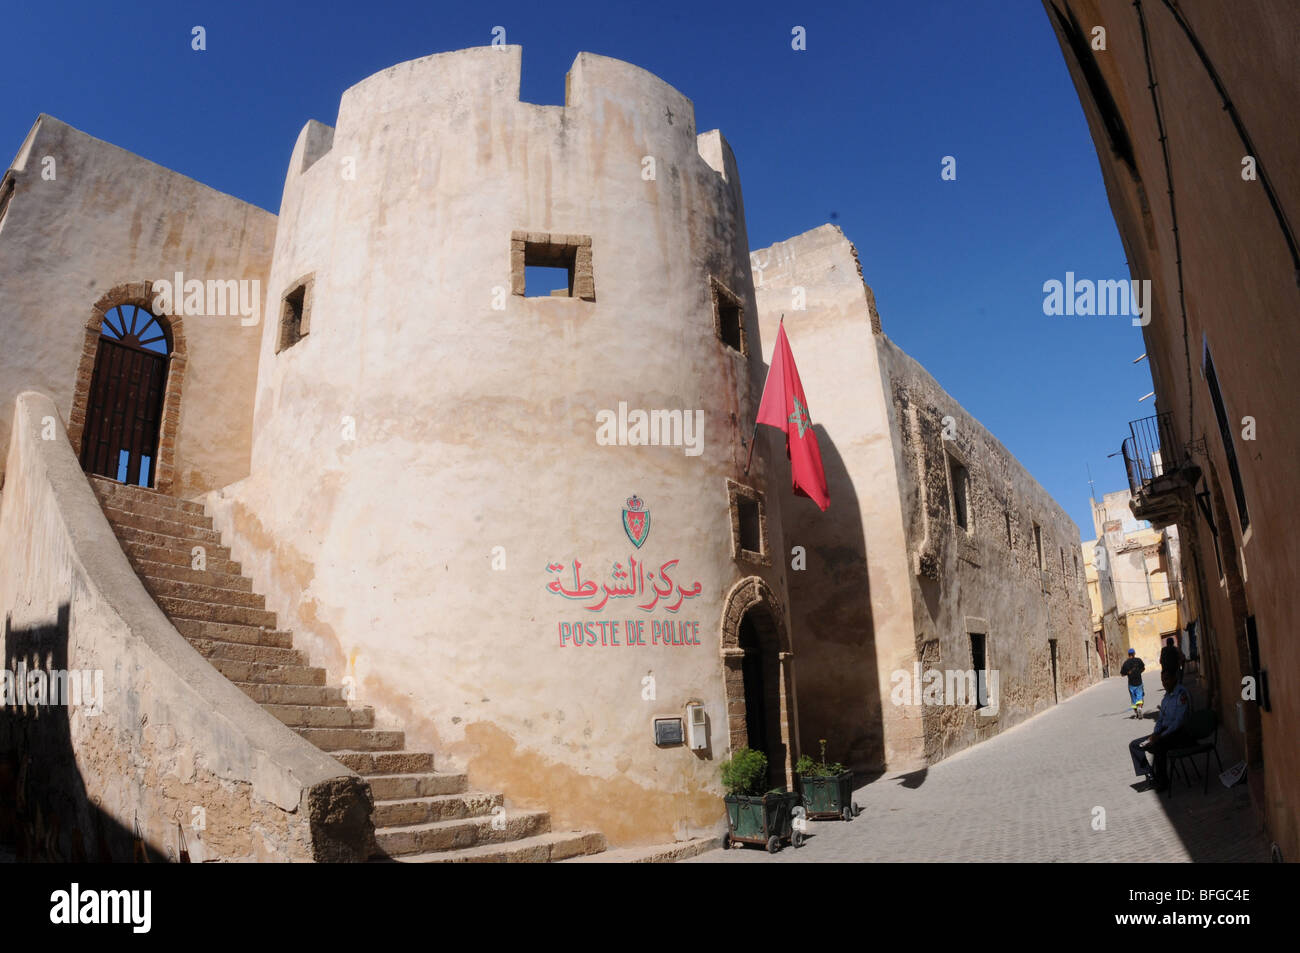 Zone de forteresse, El Jadida, Maroc Banque D'Images